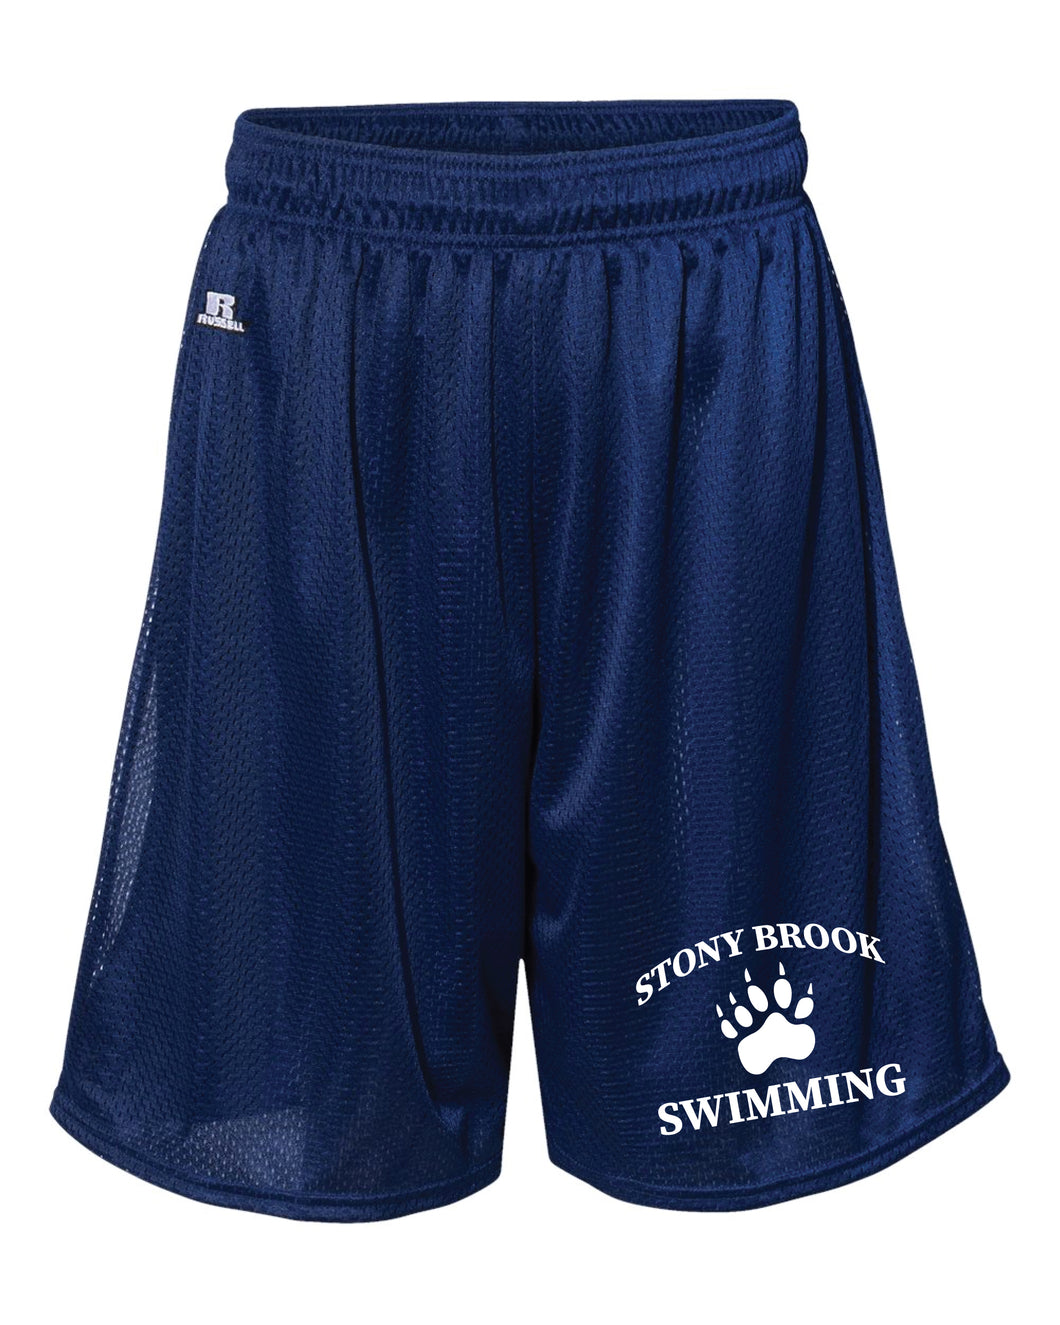 Stony Brook Swimming Russell Athletic Tech Shorts - Navy - 5KounT2018